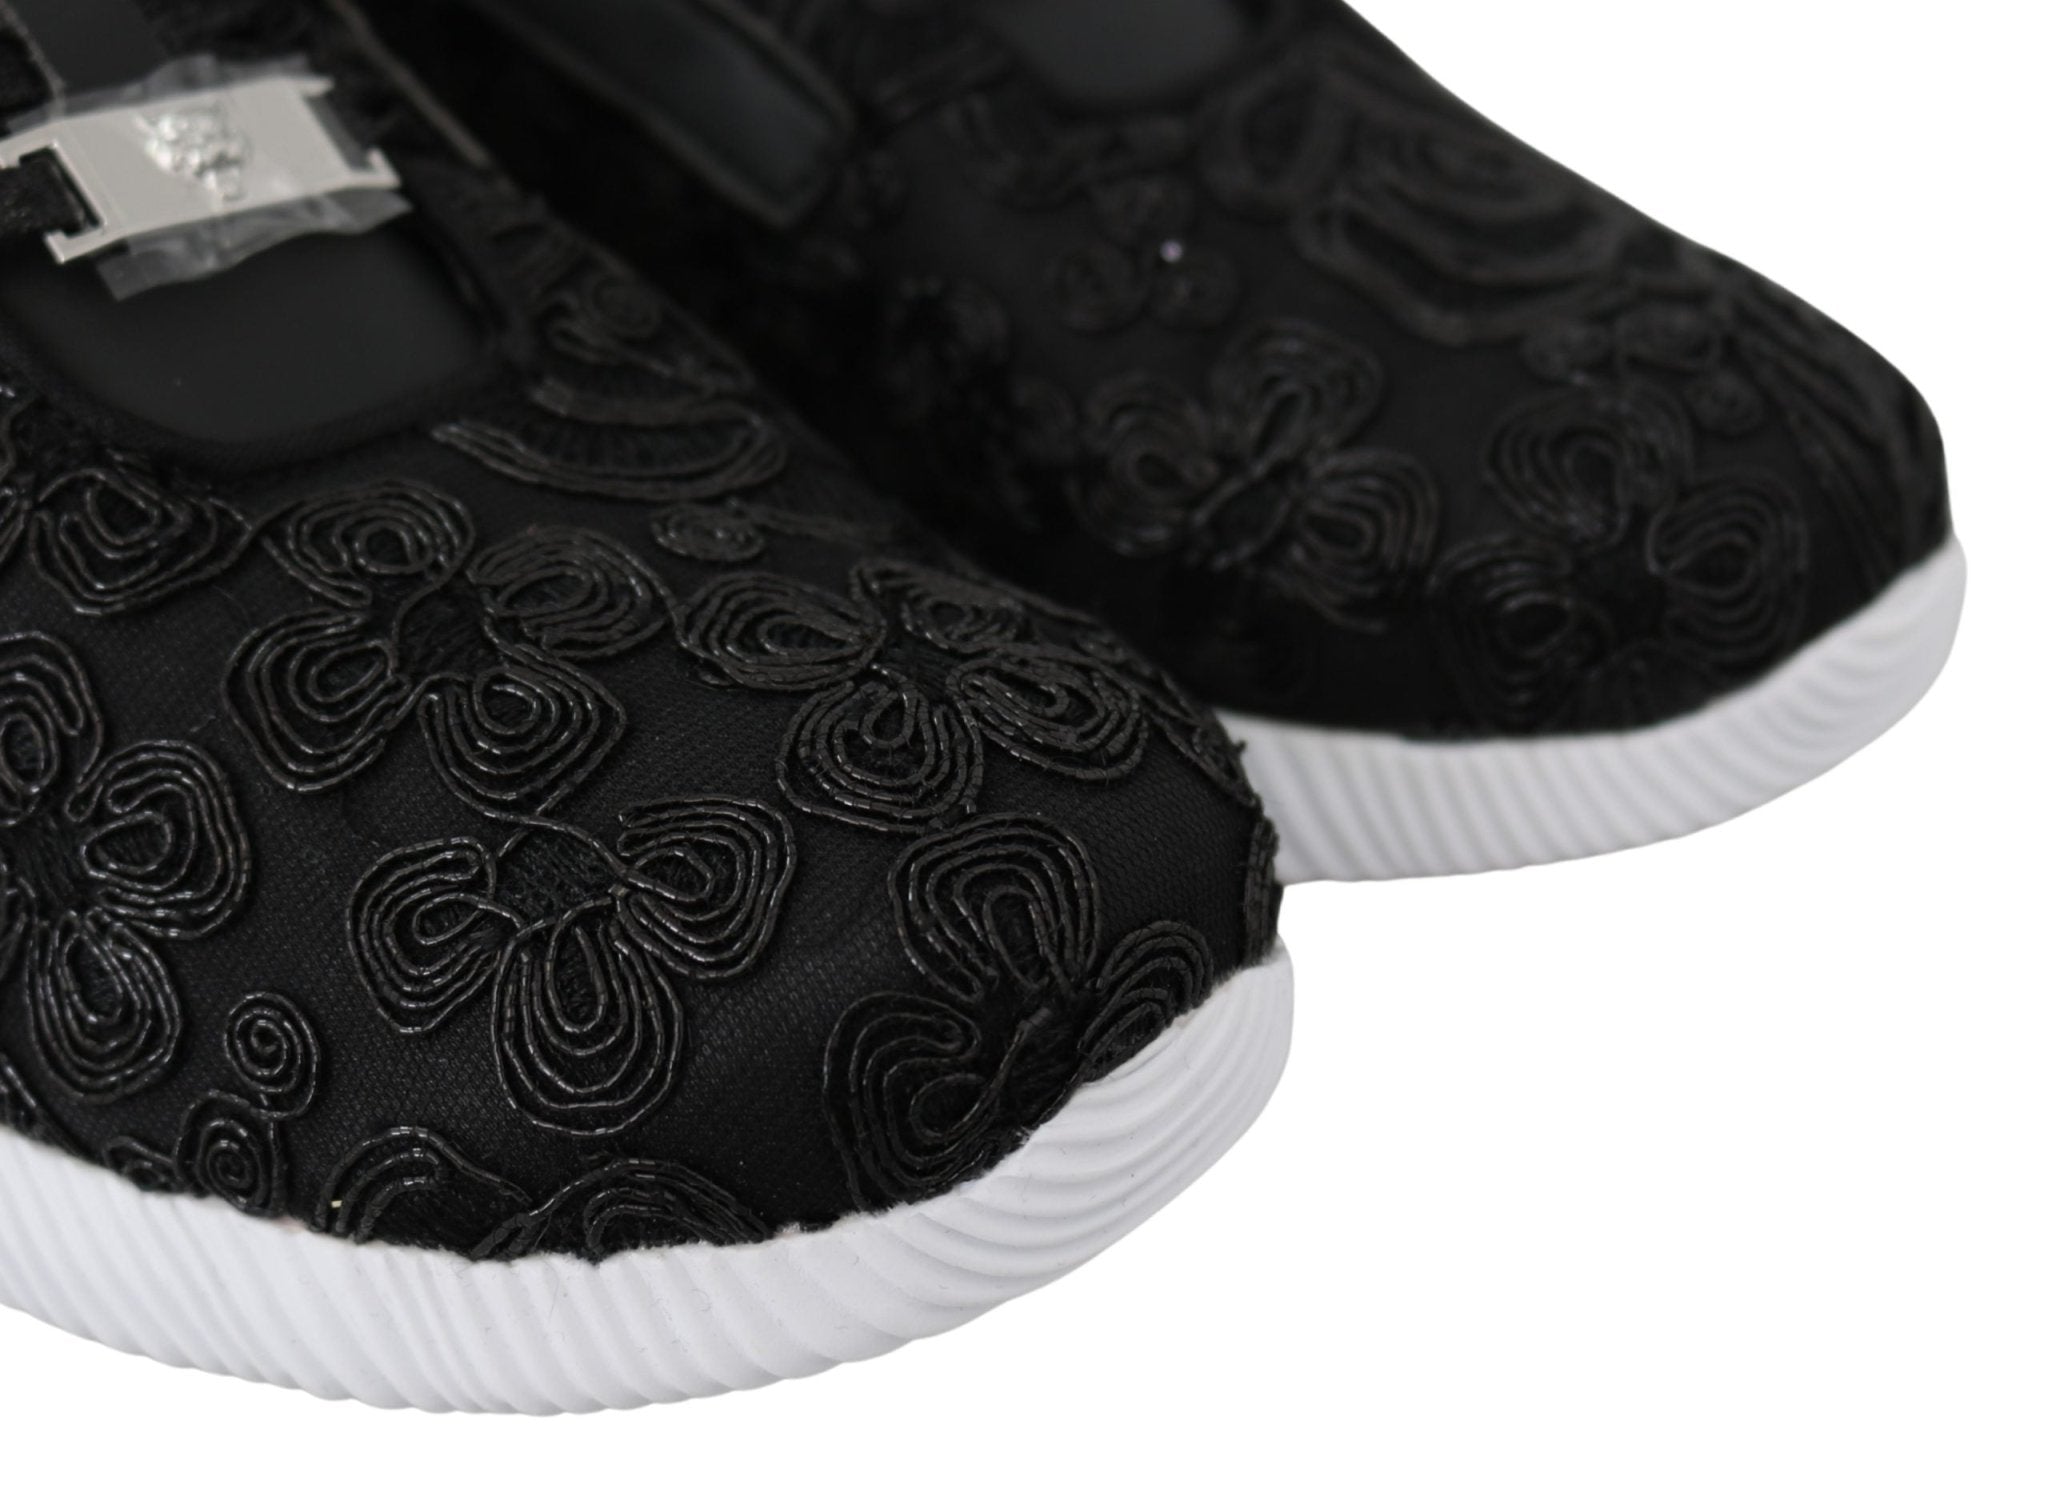 Plein Sport Black Polyester Runner Joice Sneakers Shoes - Fizigo